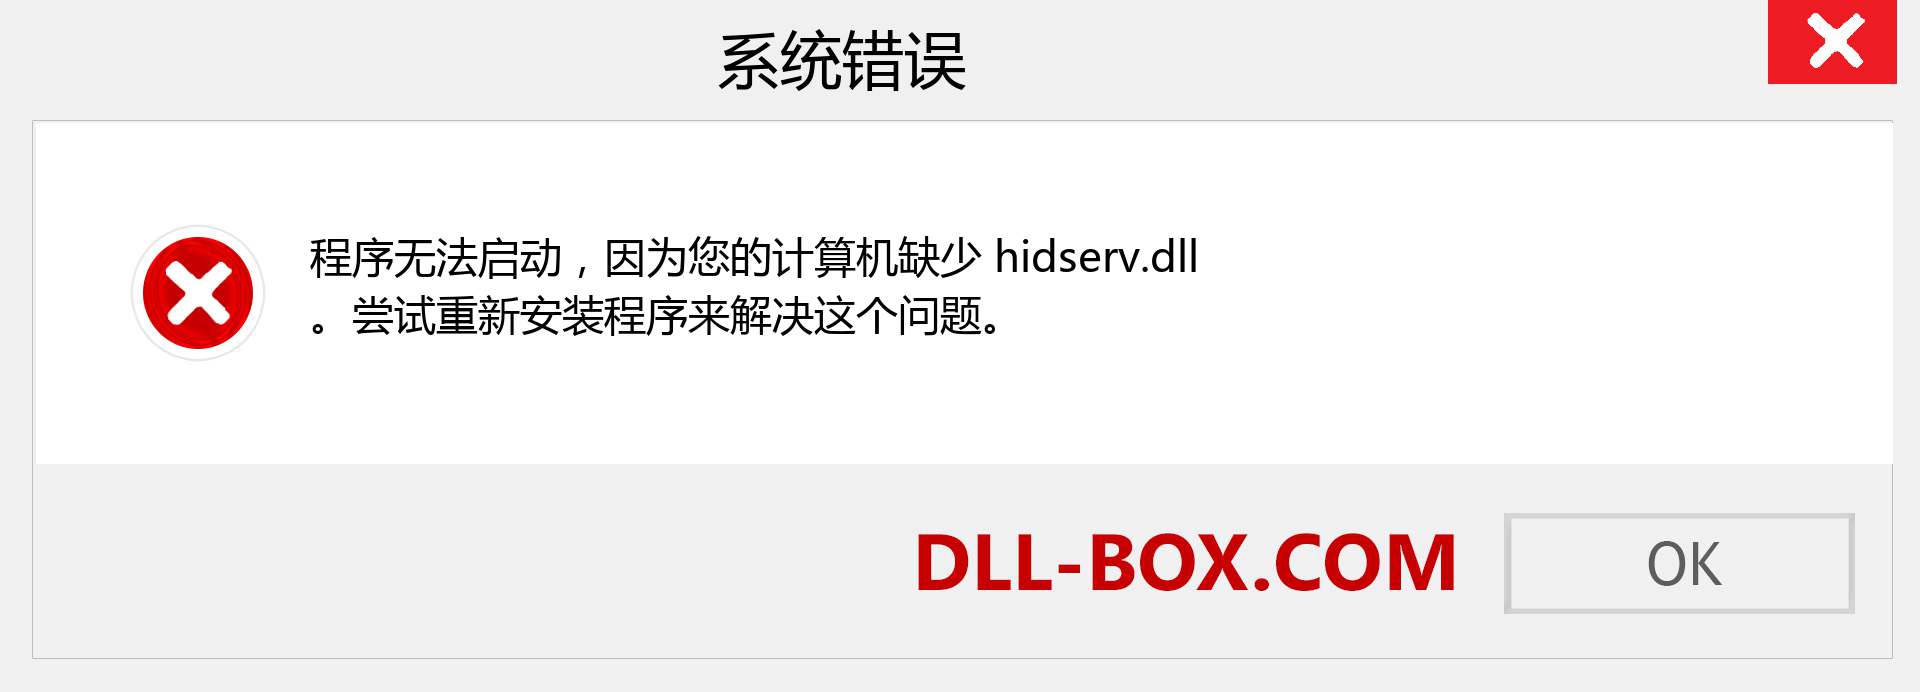 hidserv.dll 文件丢失？。 适用于 Windows 7、8、10 的下载 - 修复 Windows、照片、图像上的 hidserv dll 丢失错误